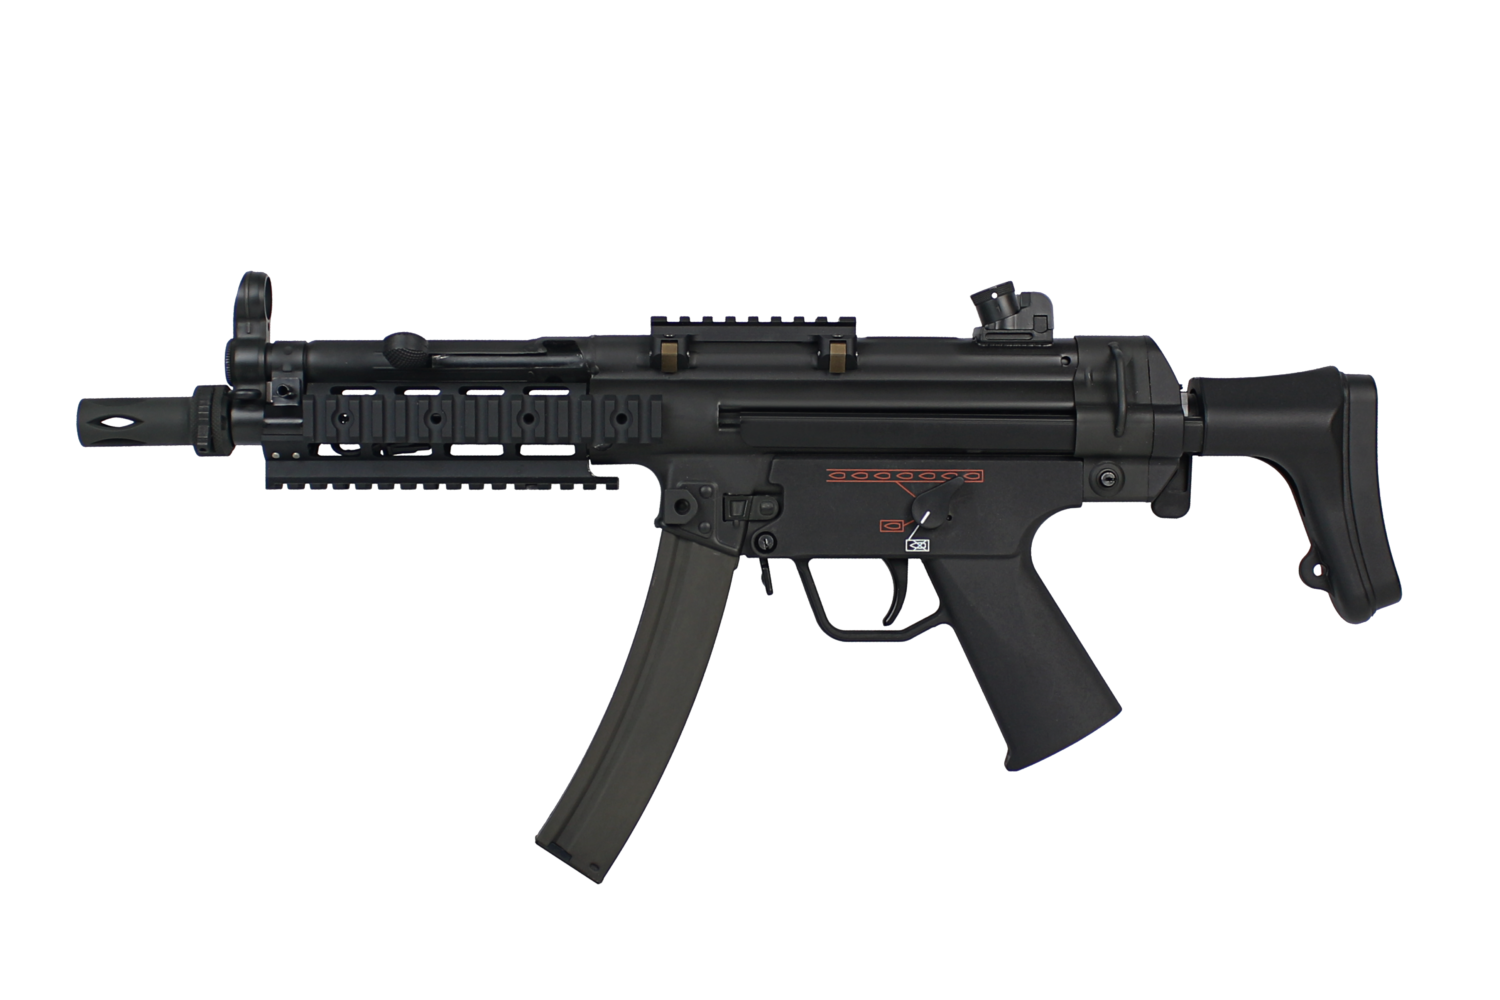 Bolt AirSoft MP5 SWAT Tattico BRSS EBB 1.2 Joule - BK